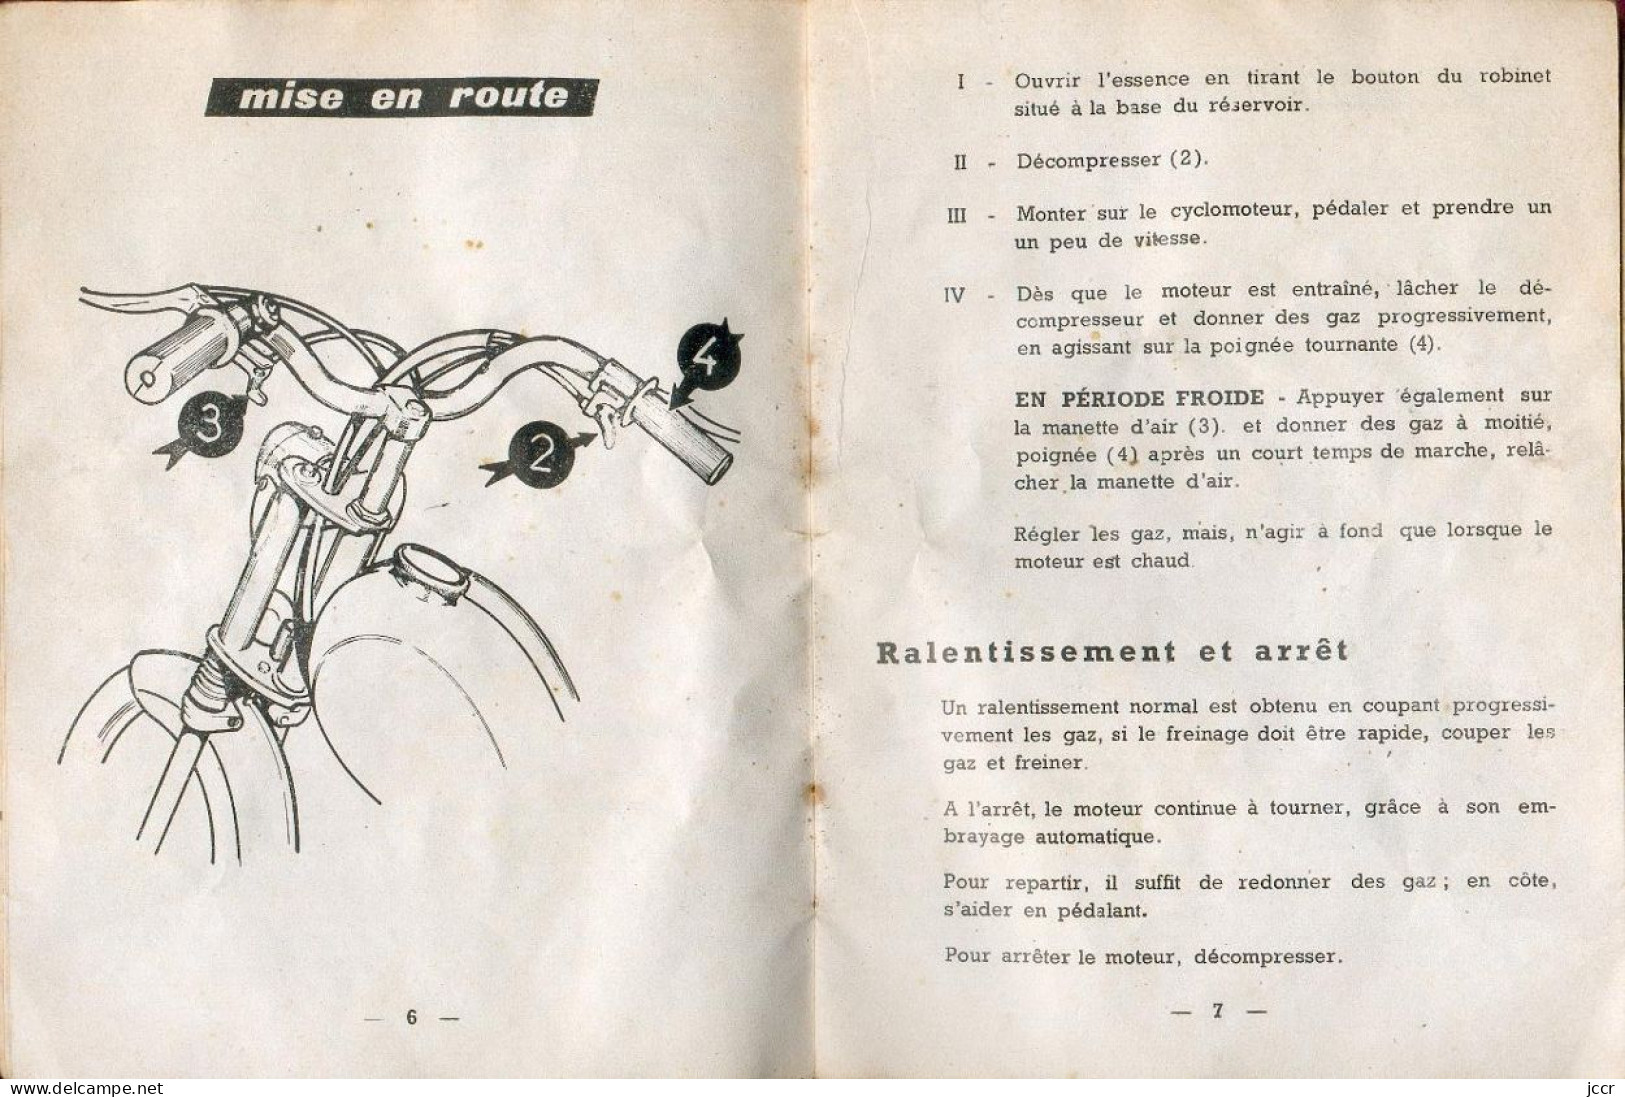 BB Peugeot Monovitesse (BB1 N, BB1 T, BB1 TL, BB1 TLS) - Notice D'Entretien - 1959 - Motorfietsen